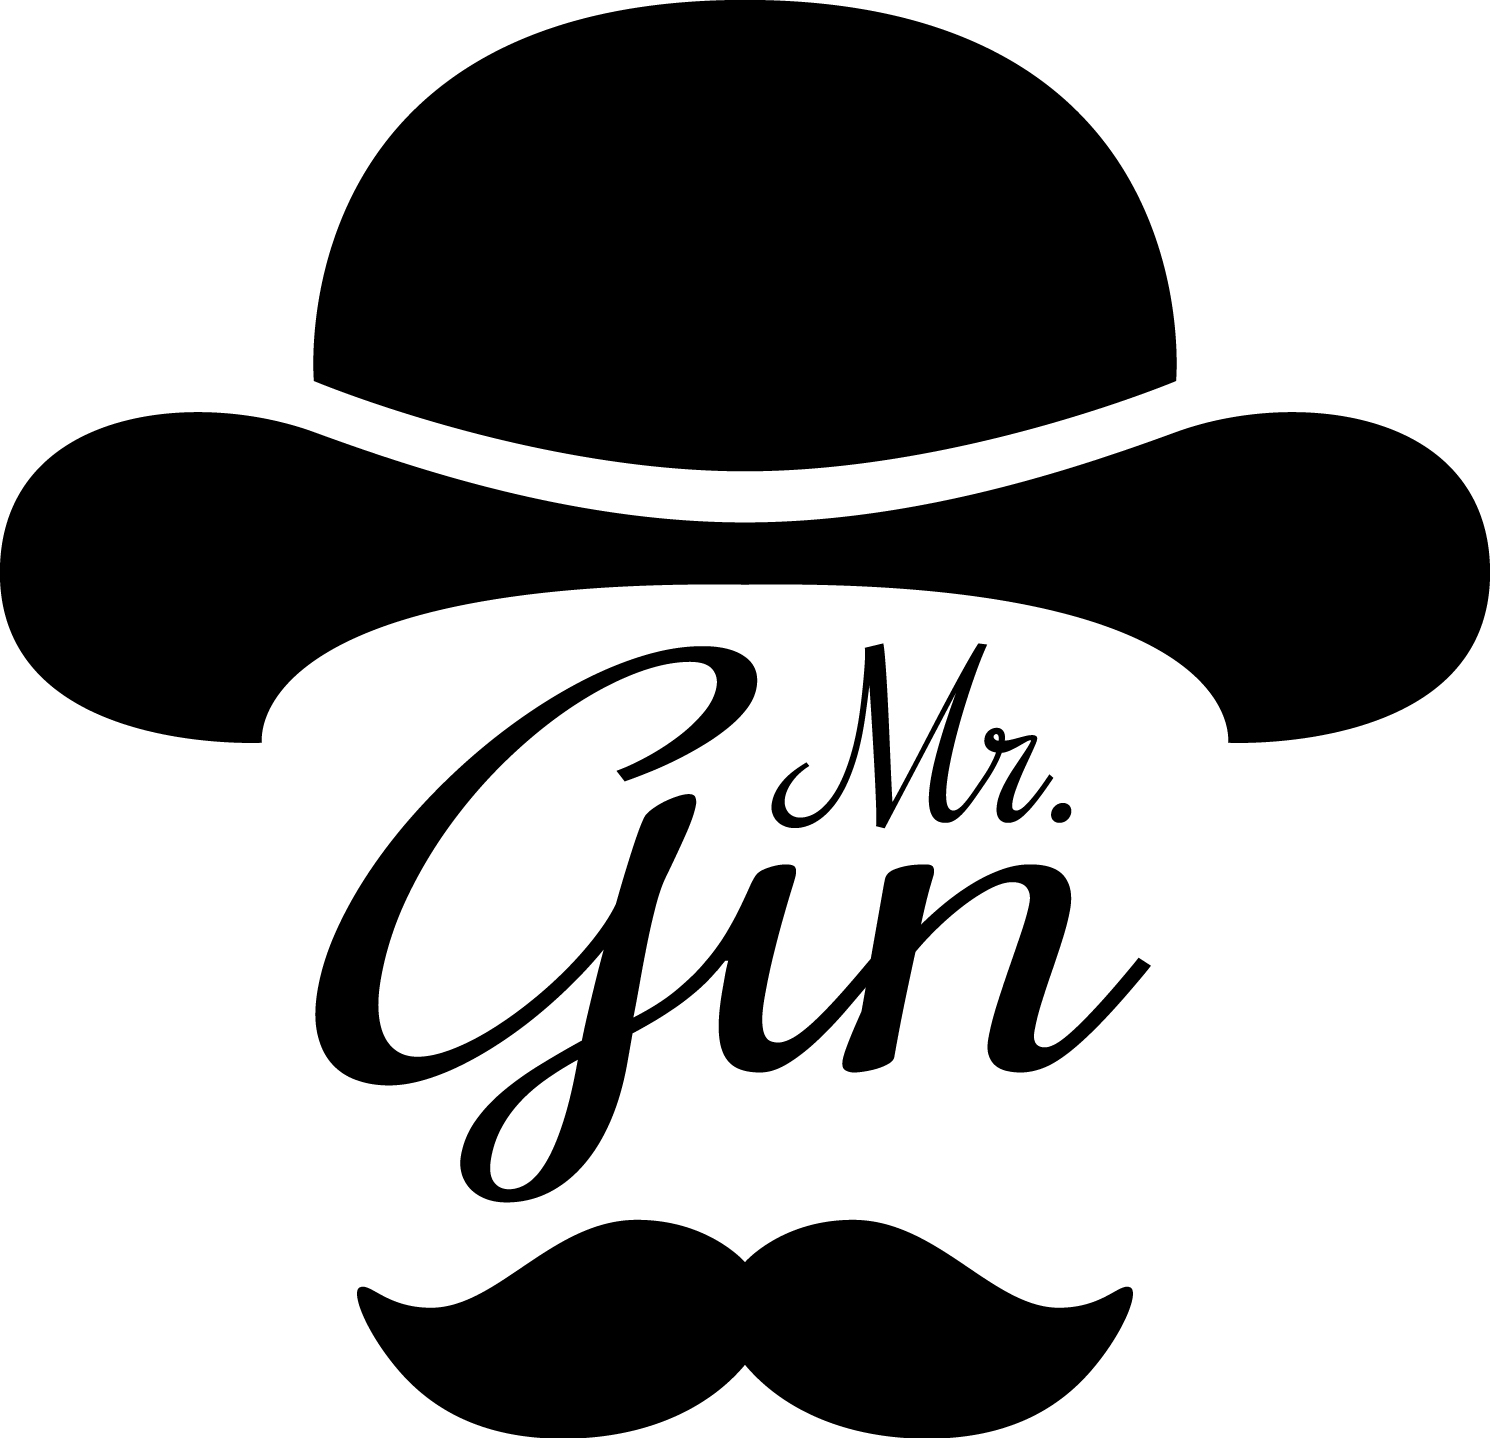 Mister Gin